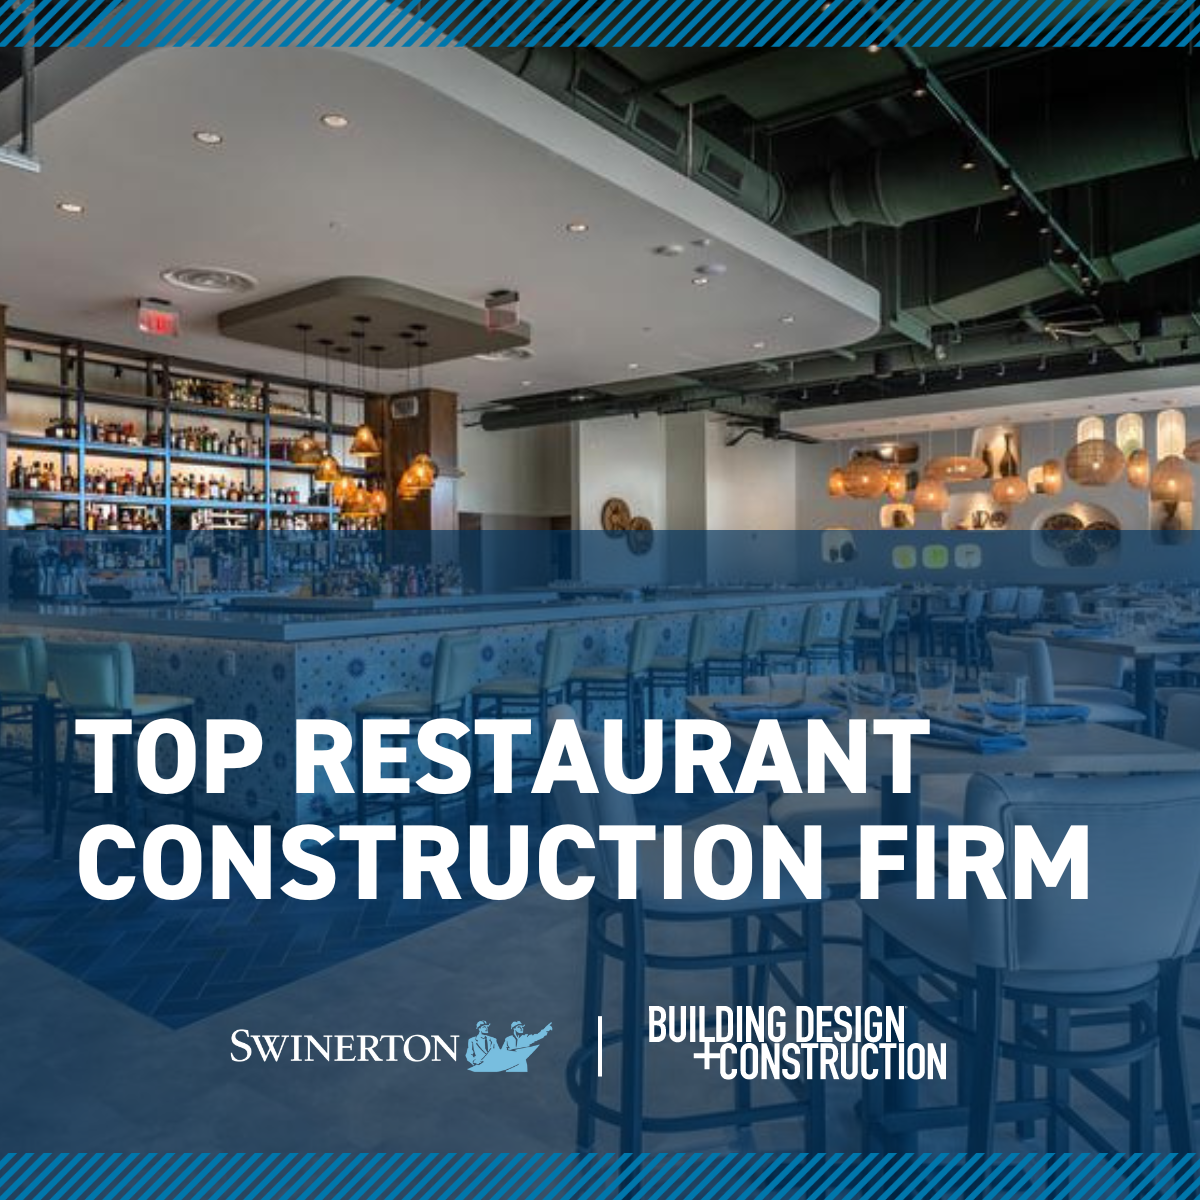 Top Restaurant Construction Firm BD+C (2)